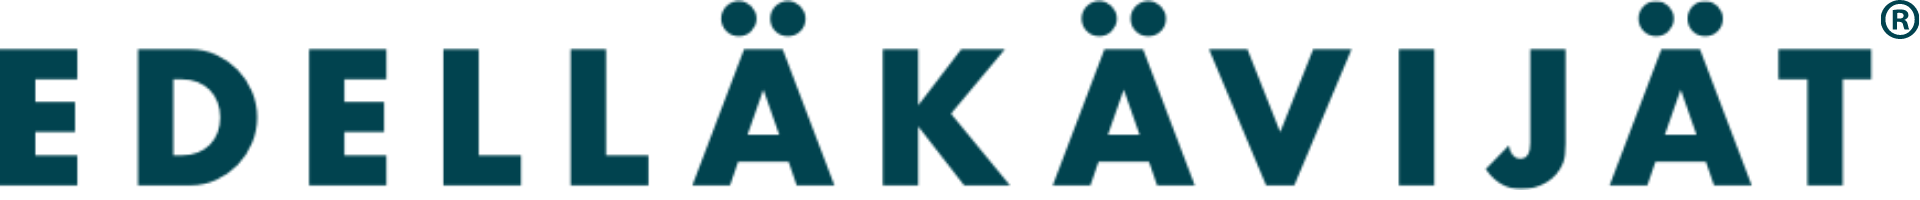 edellakavijat-logo